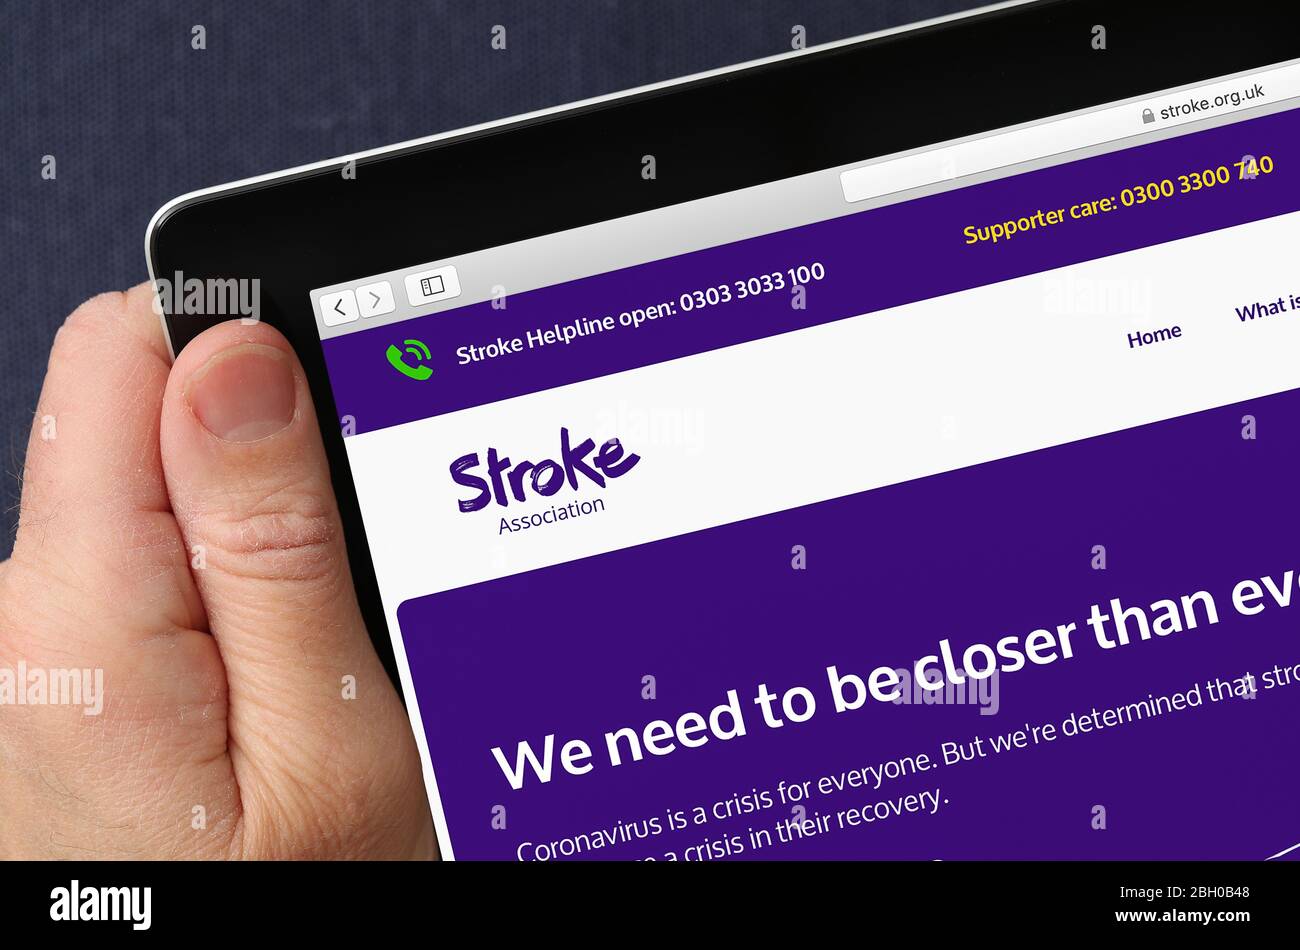 Stroke Association charity website viewed on an iPad Stock Photo